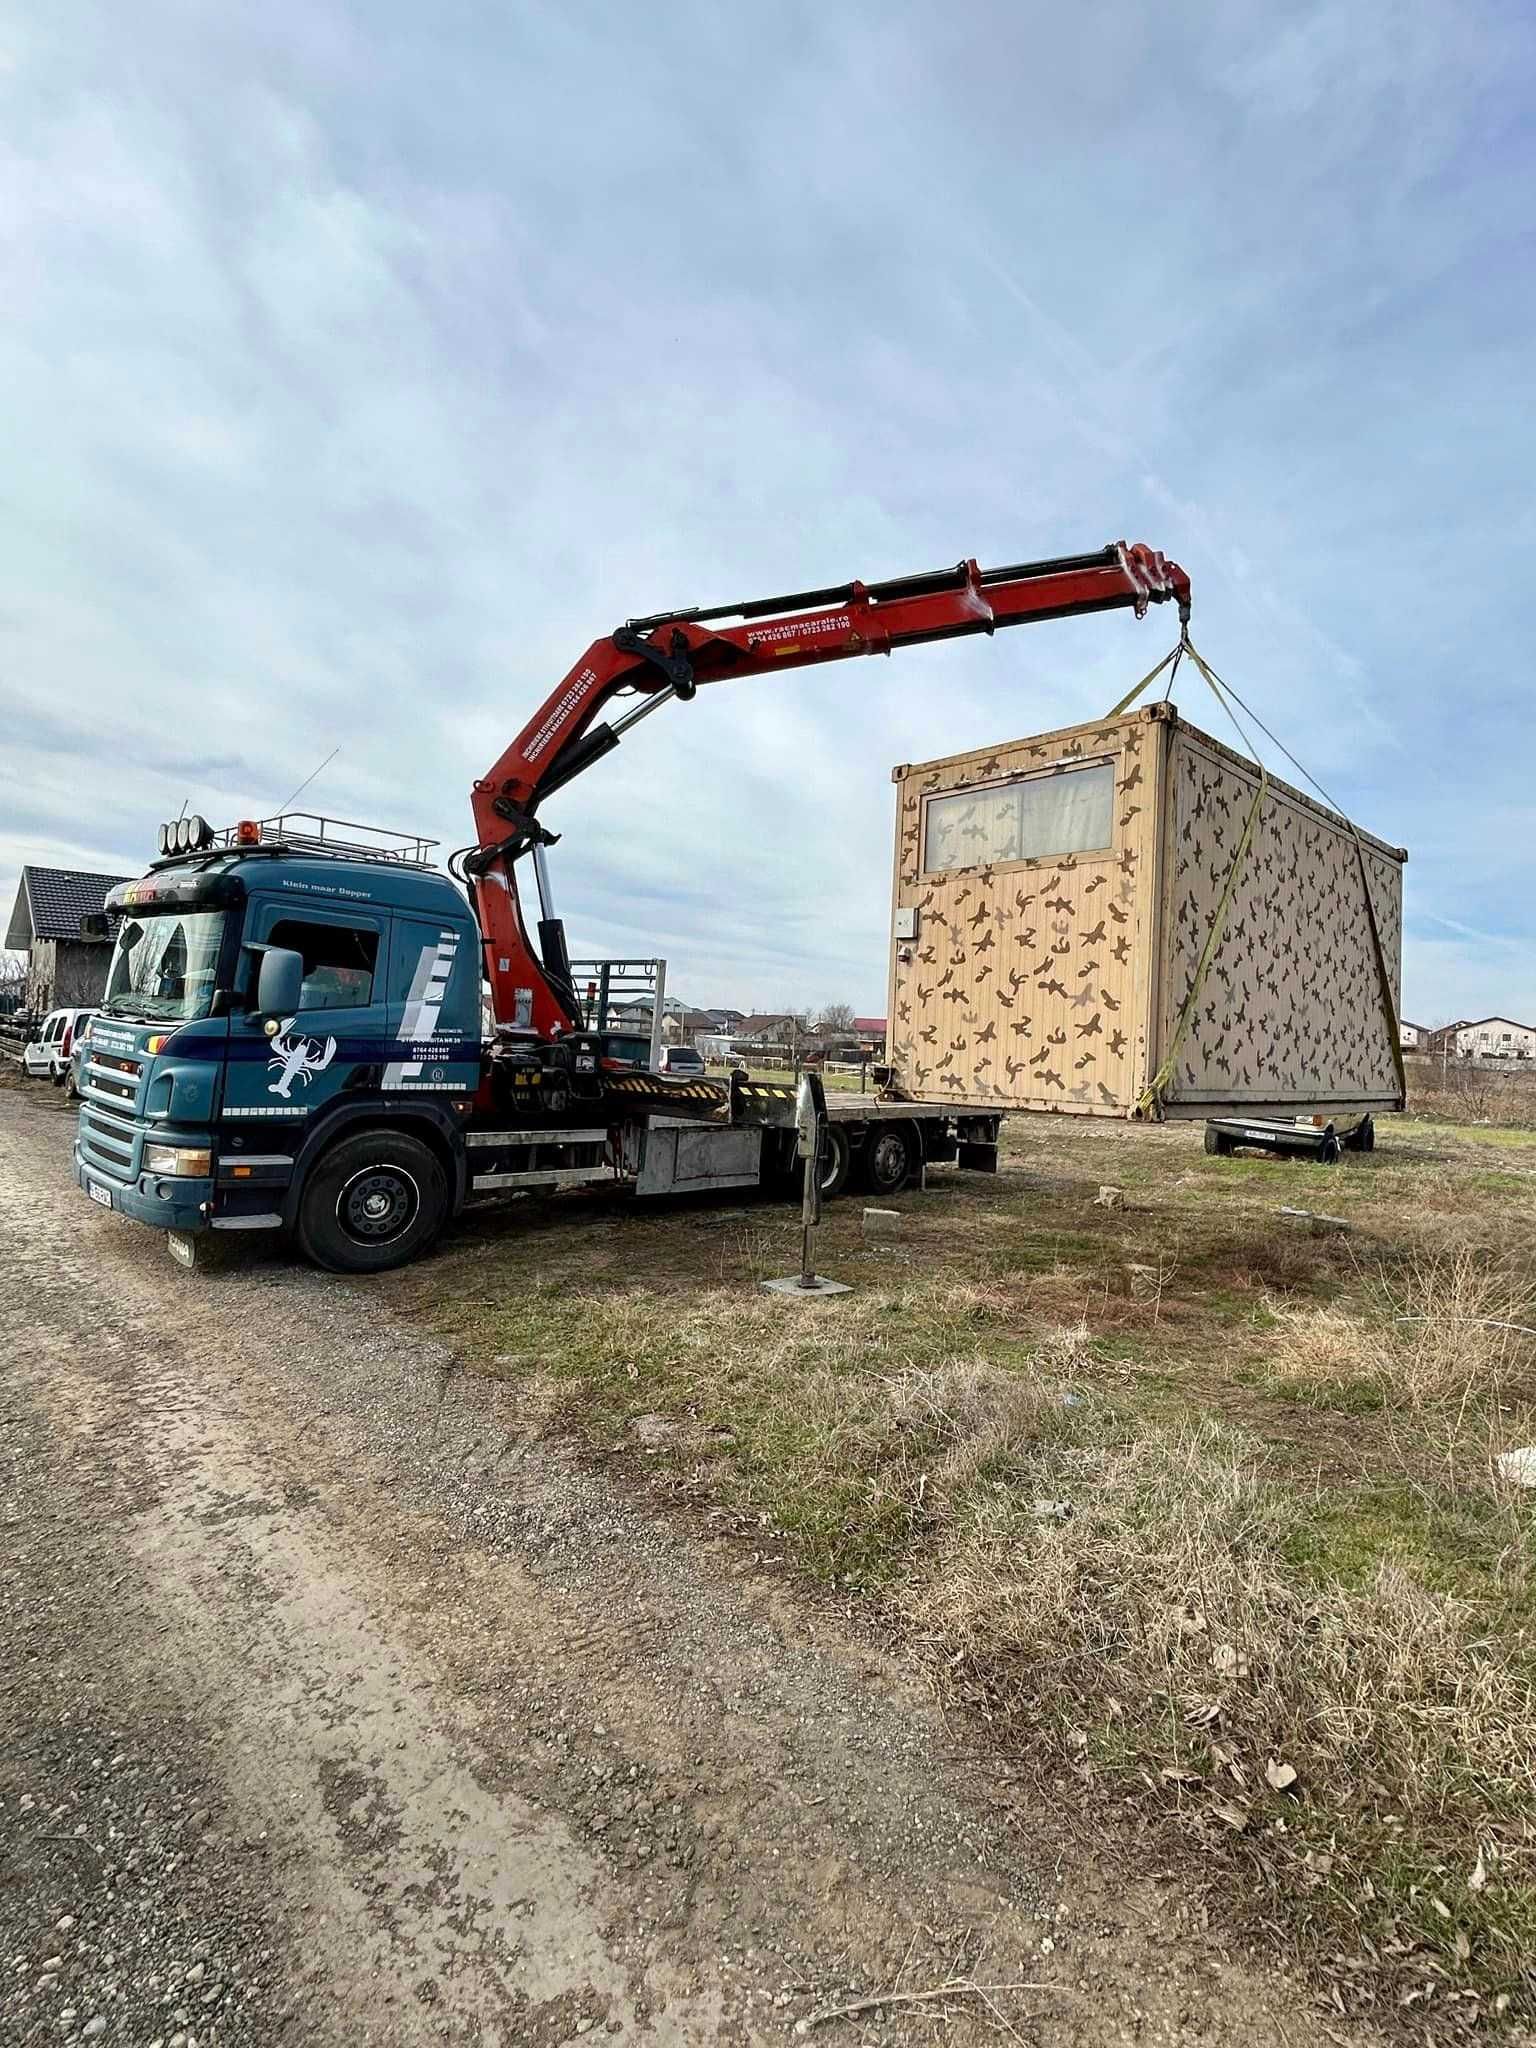 Inchiriere Camion cu Macara - Automacara - Transport Container Utilaje